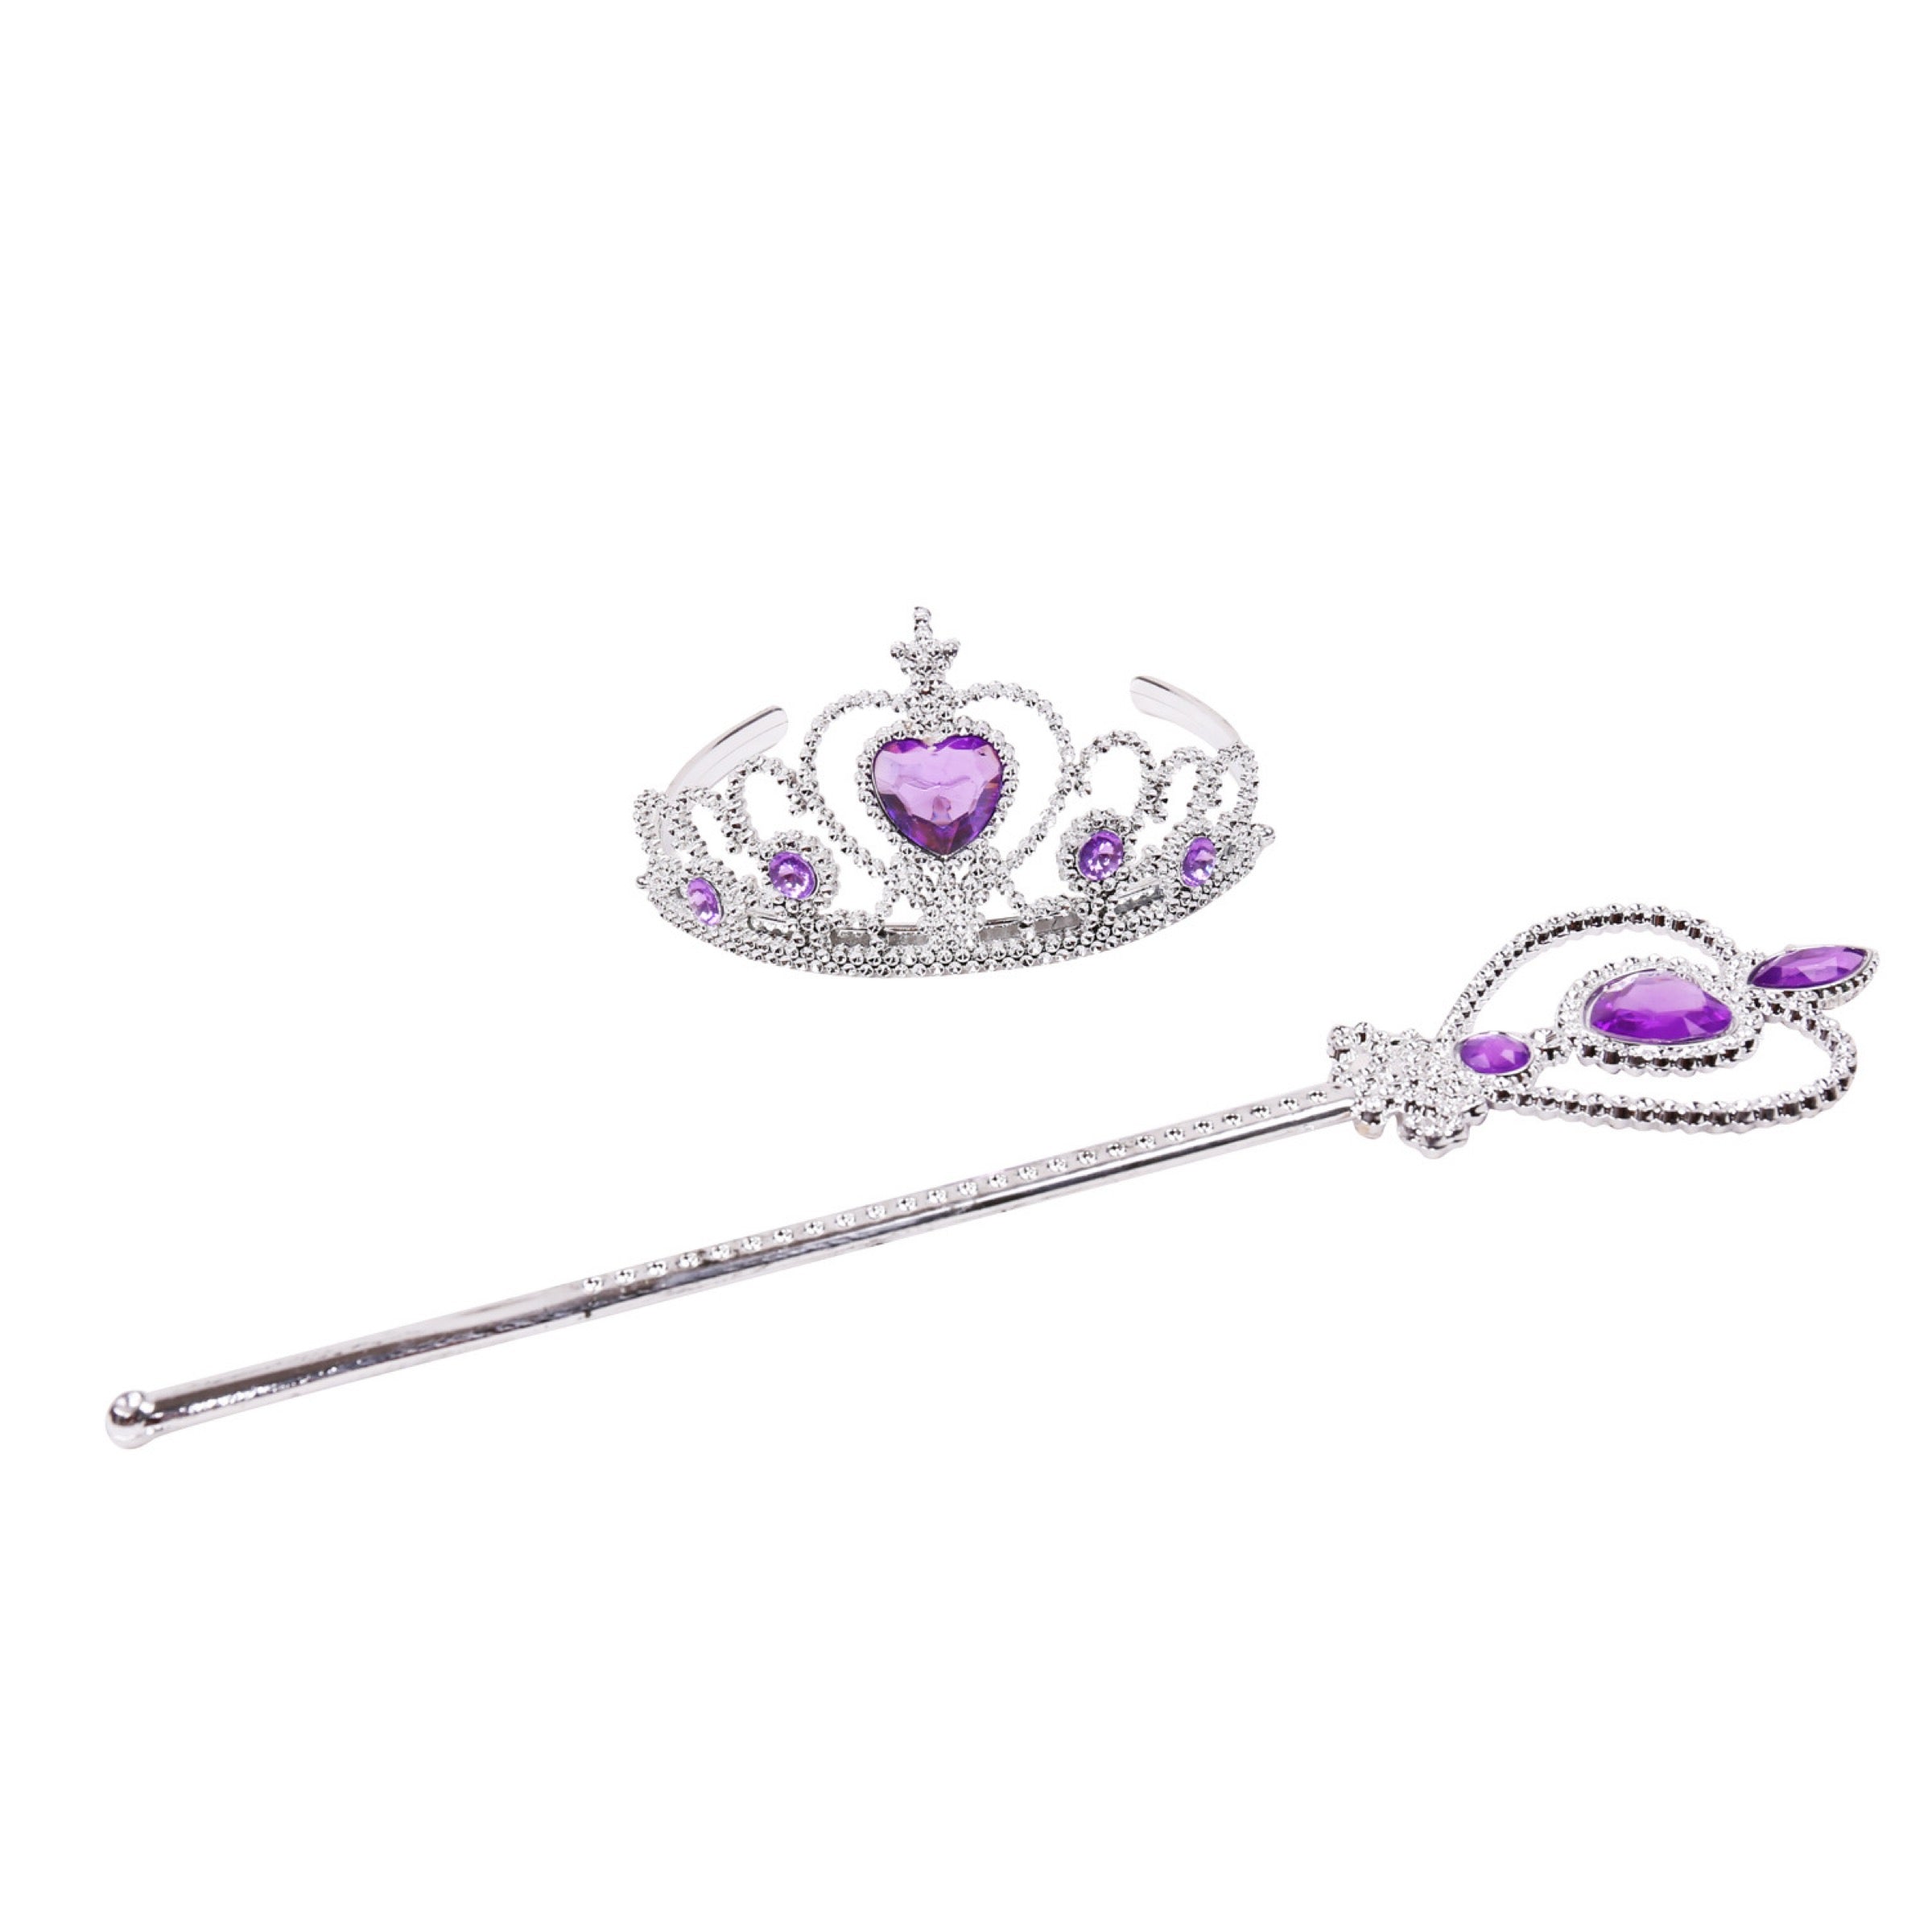 Princess Frozen Accessories Tiara Crown And Magic Wand